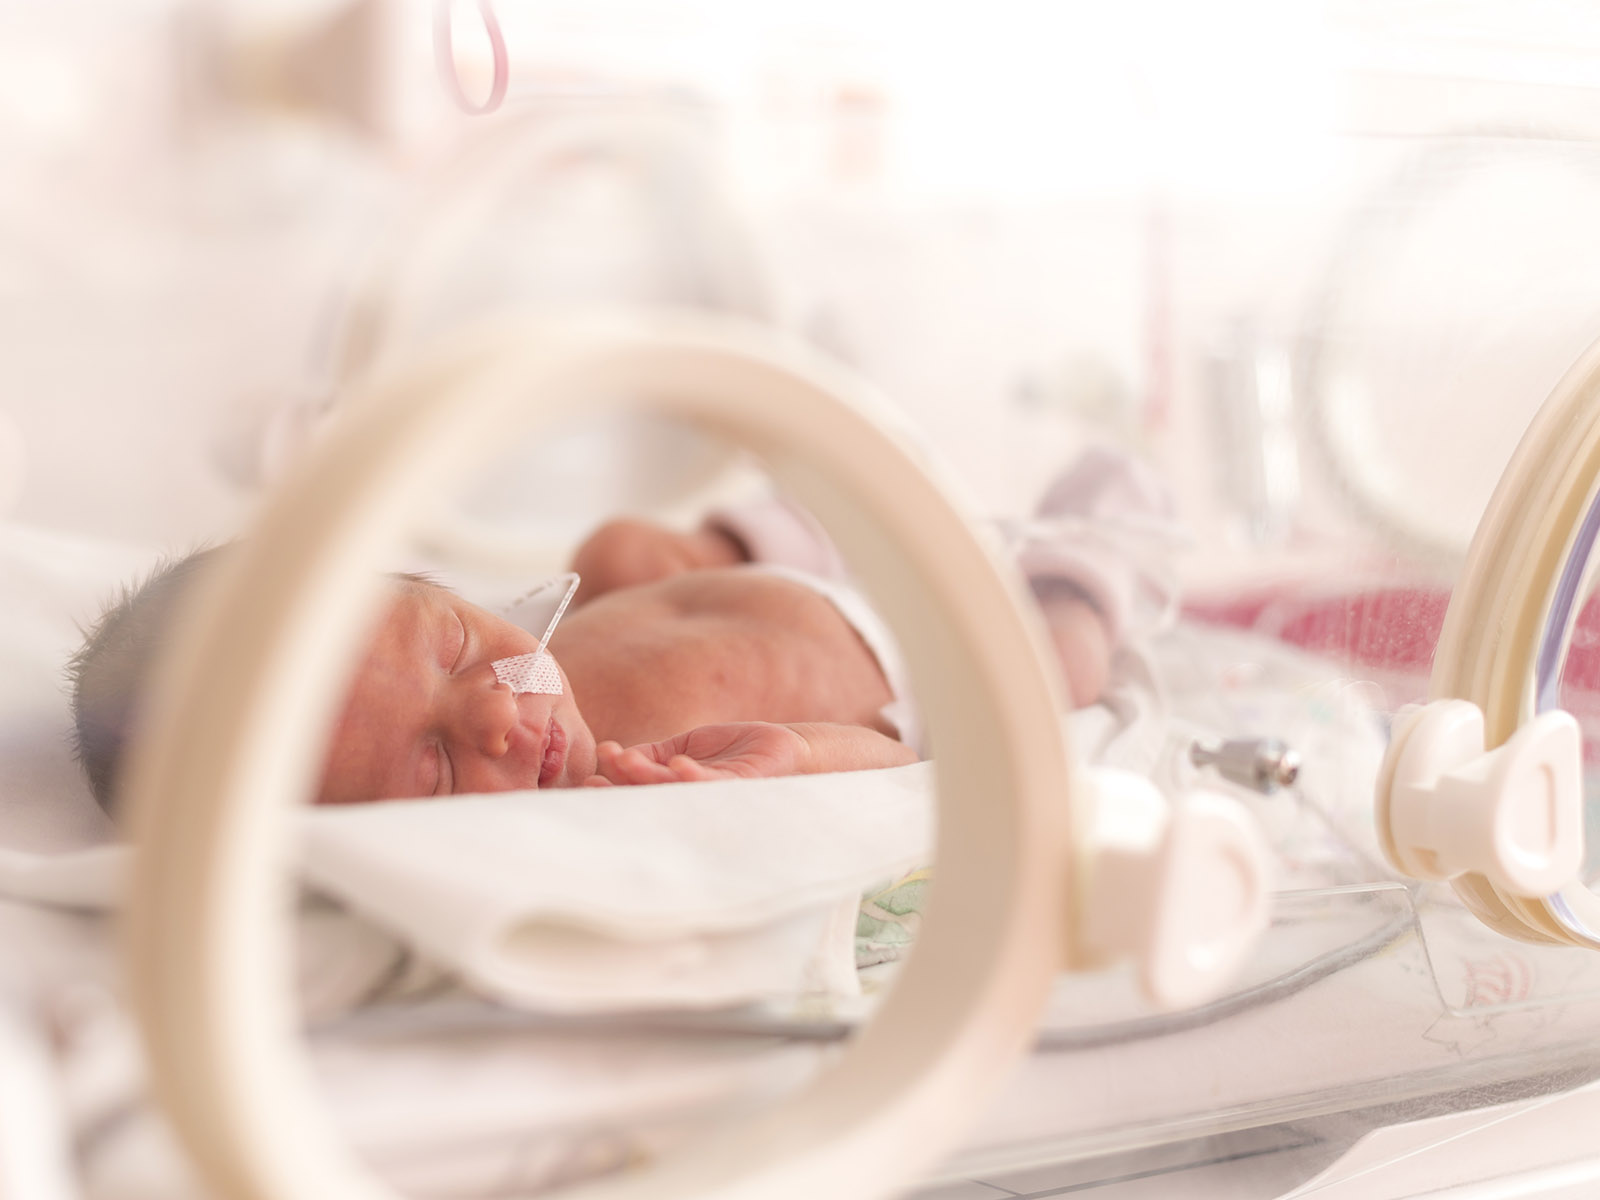 A baby born prematurely